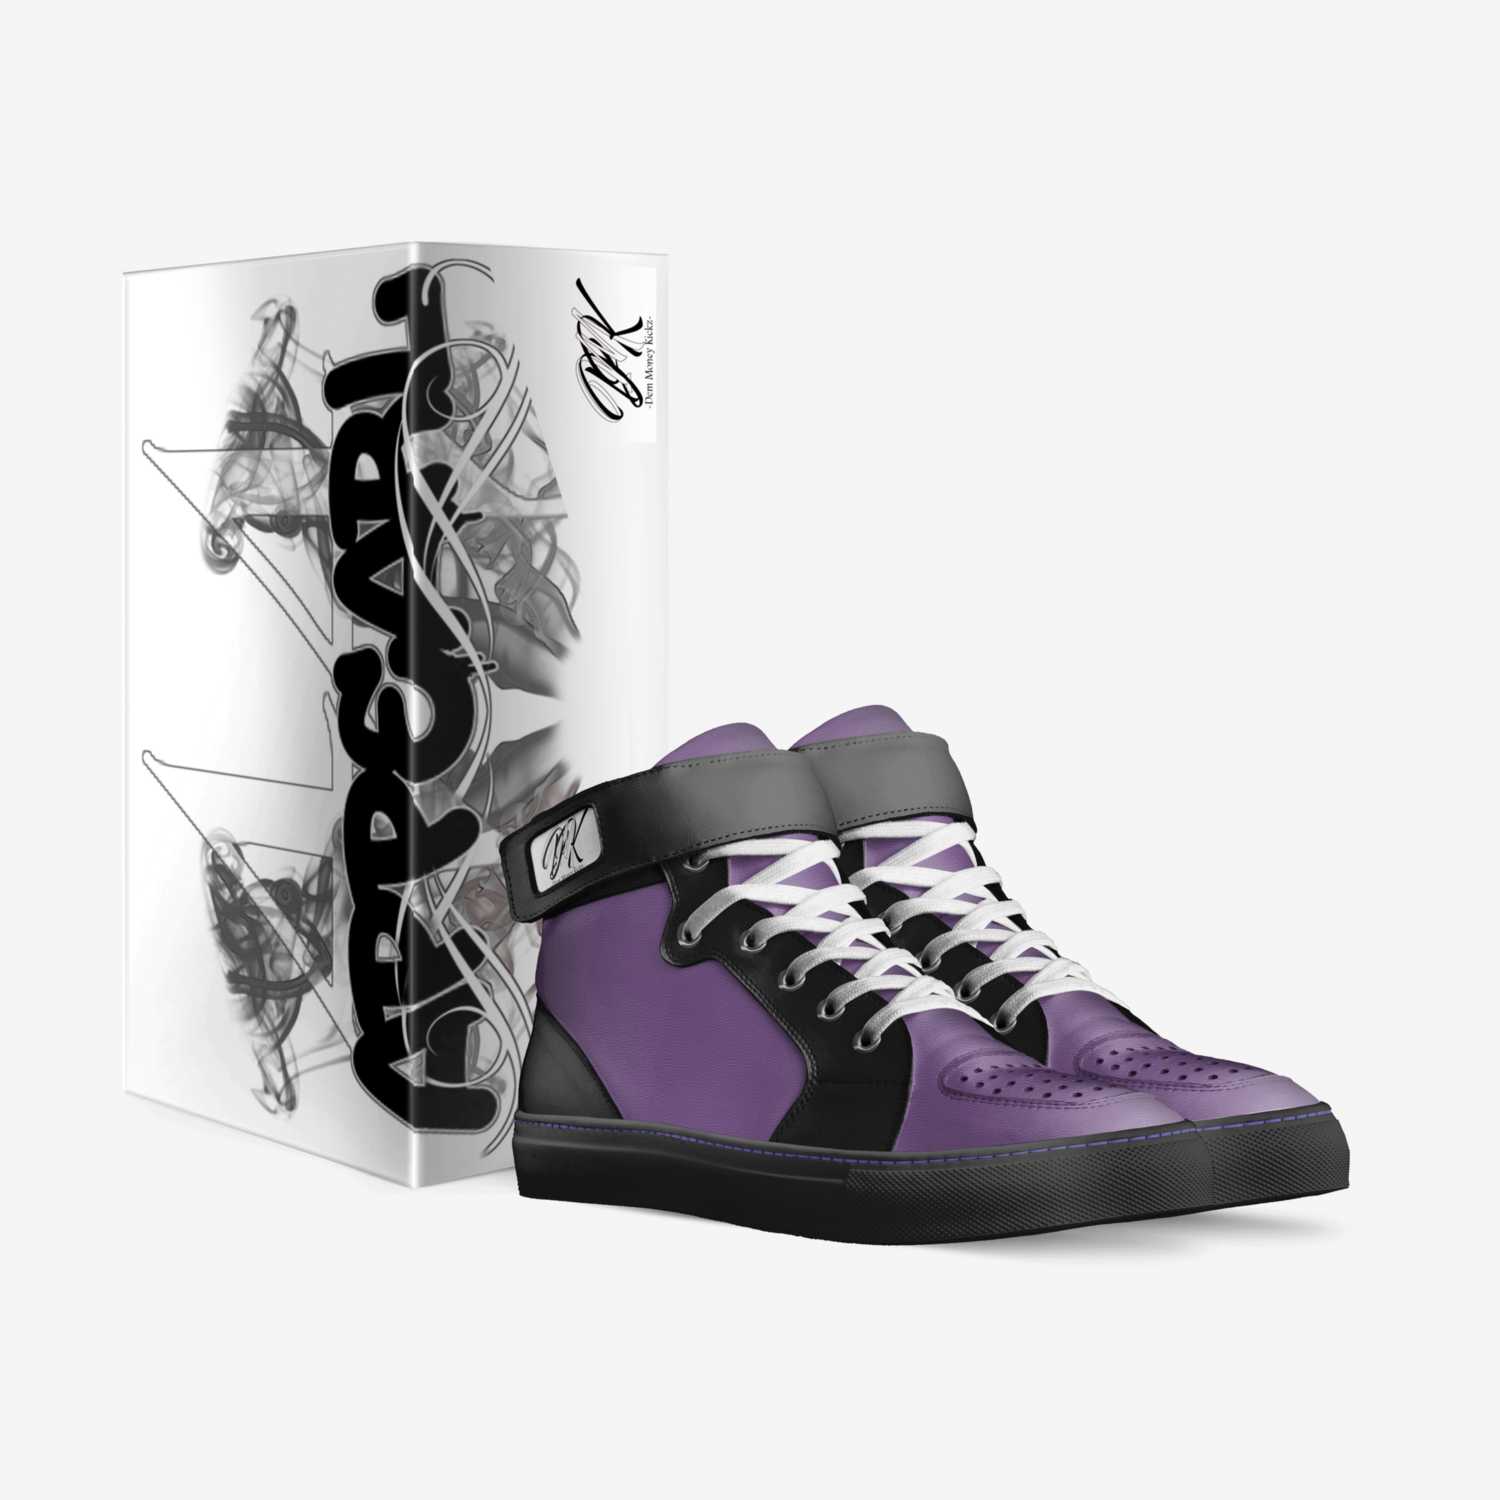 DEM MONEY KICKZ custom made in Italy shoes by Dmoney1644 Lockett | Box view